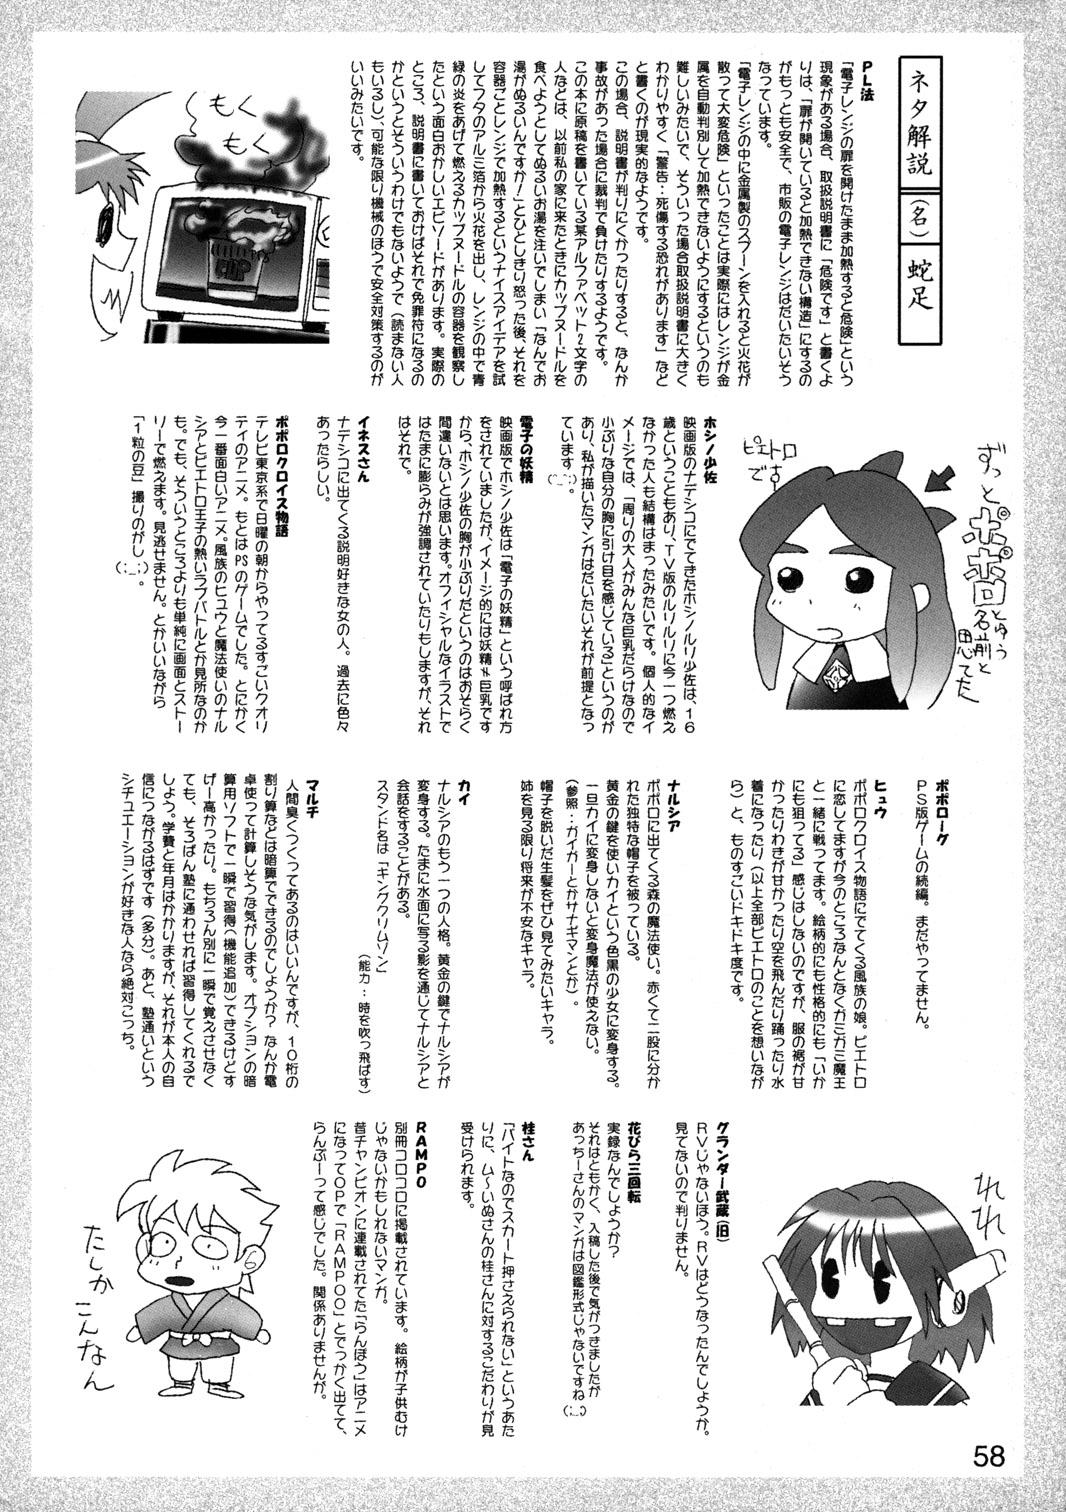 (C55) [Mutekei-Fire (Yuuichi)] Sekai Uki-Uki Daizukan 1998-nendo Ban - The Great Pictorial Guide of 'Uki-Uki' in the World '98 Edition (Various) 56